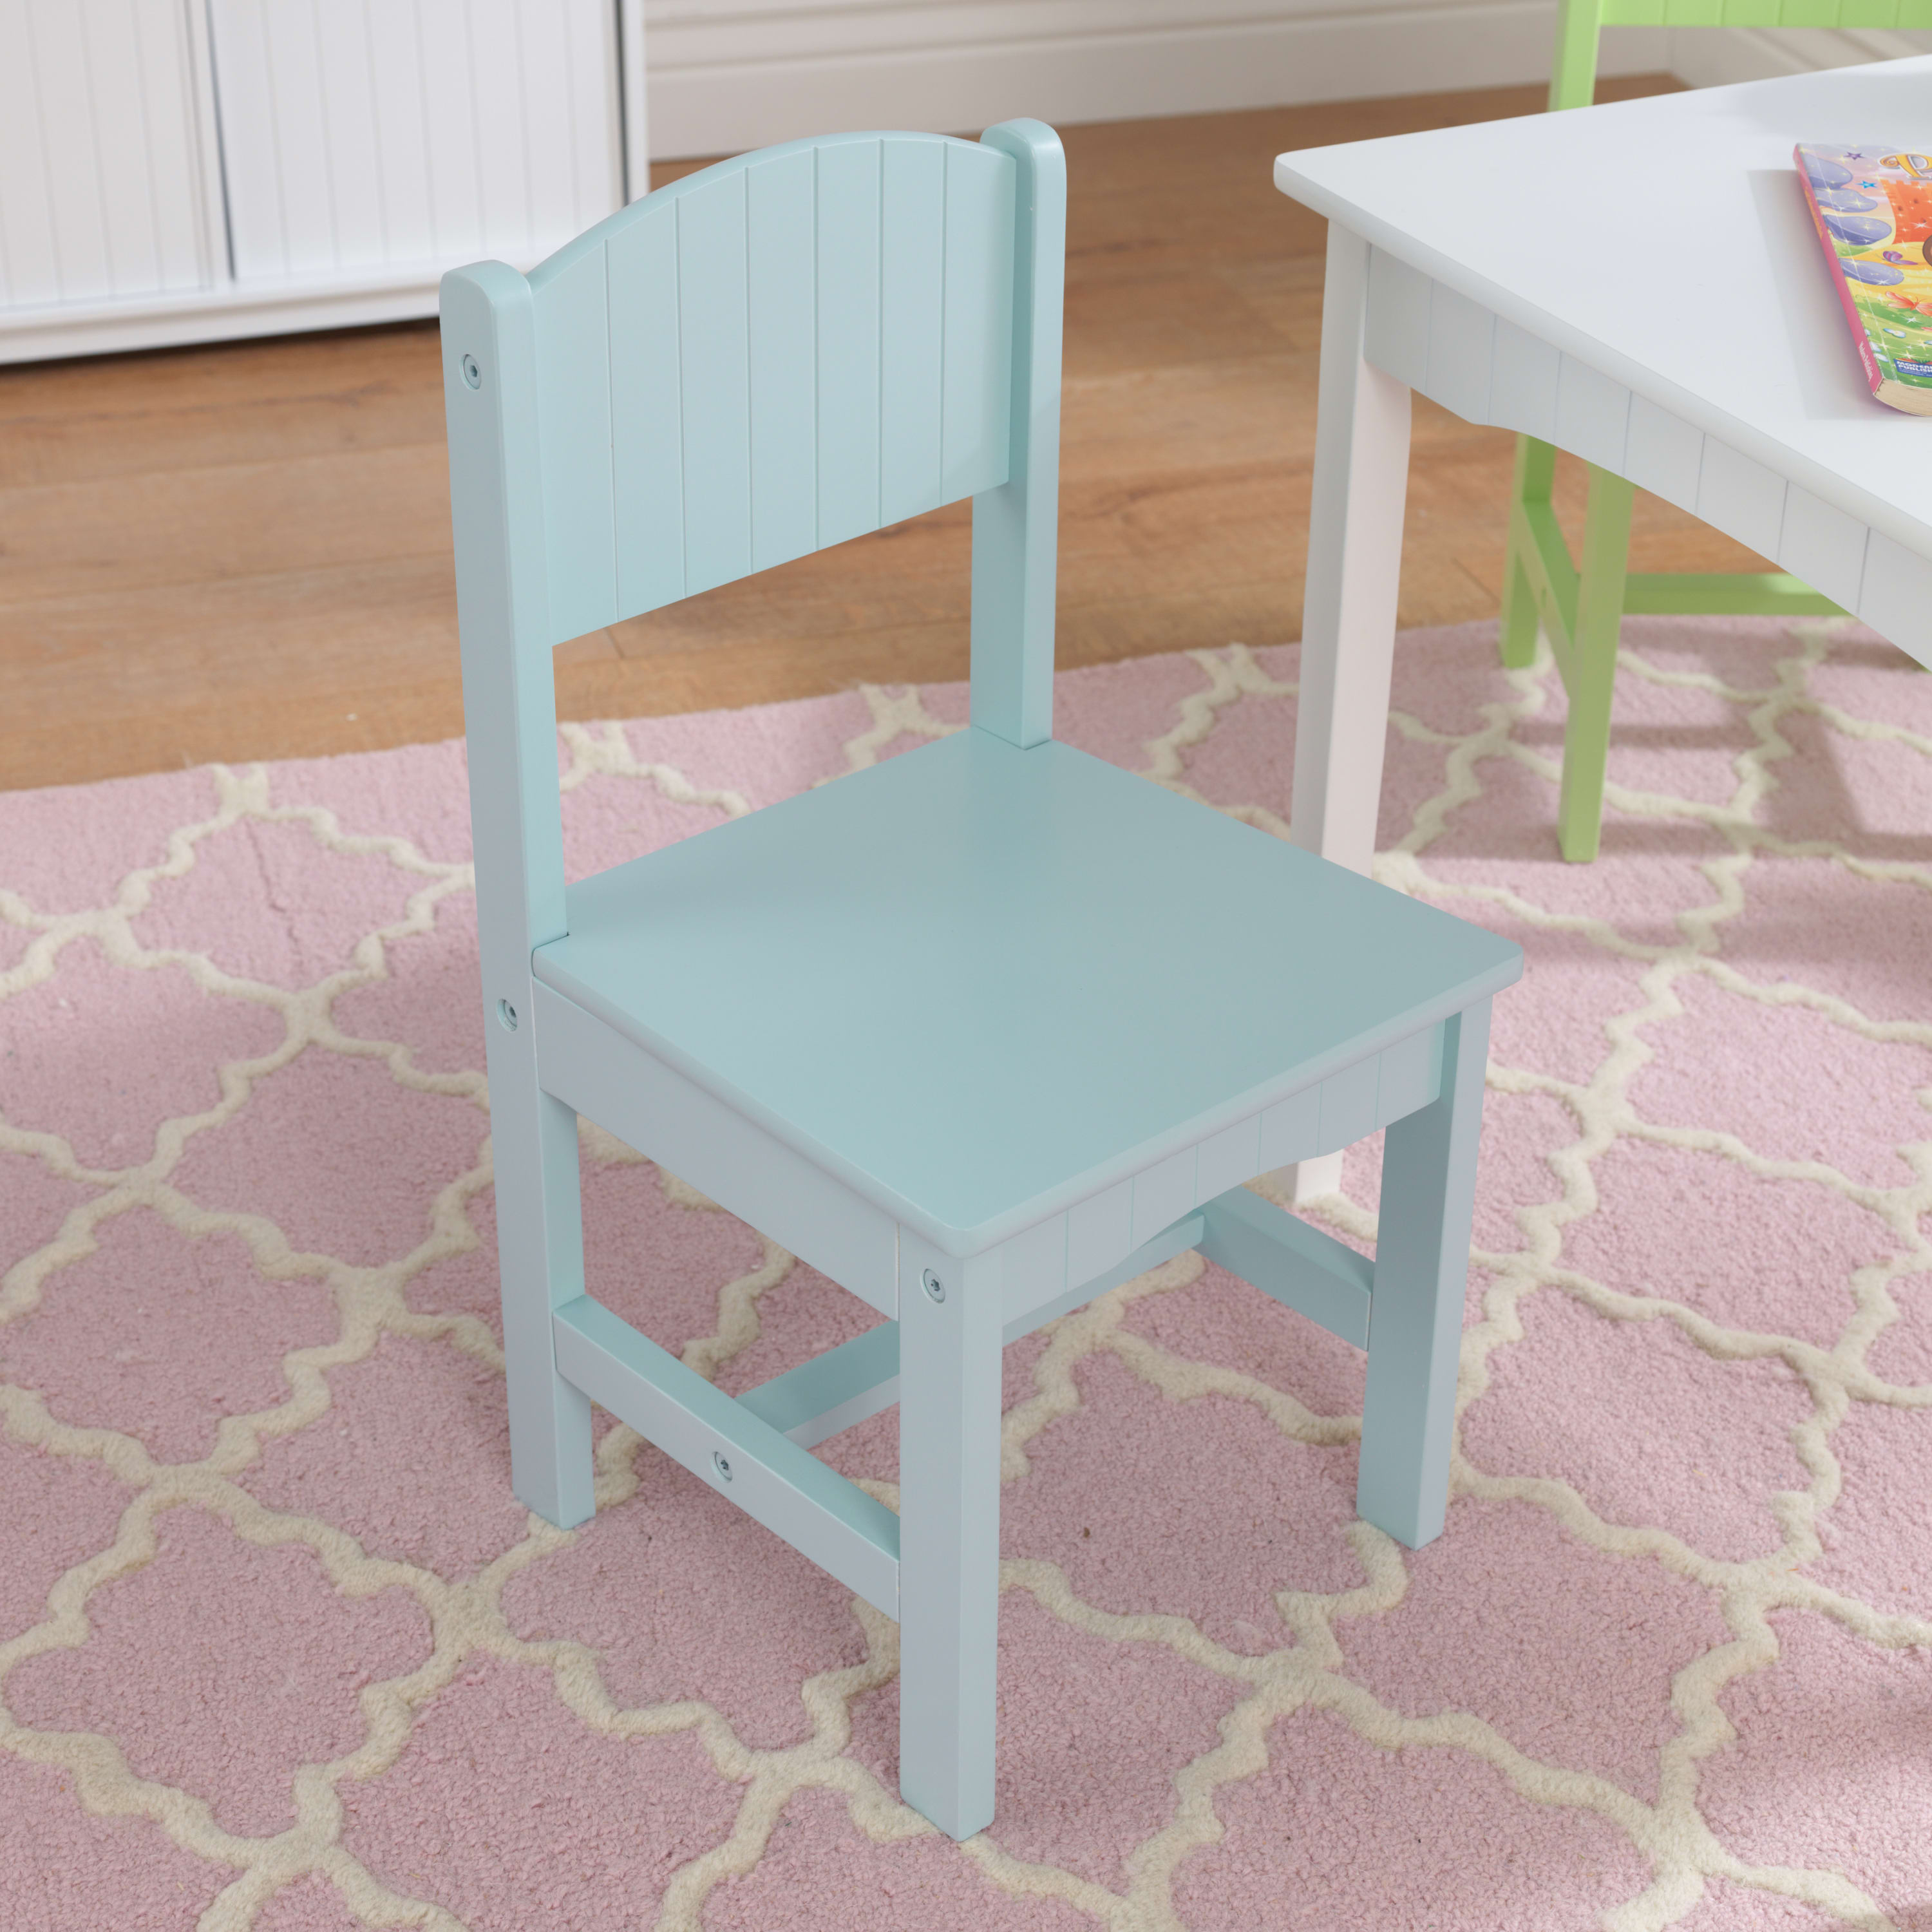 KidKraft Nantucket Children's Wooden Table & 4 Chair Set, Pastel Colors - image 6 of 9